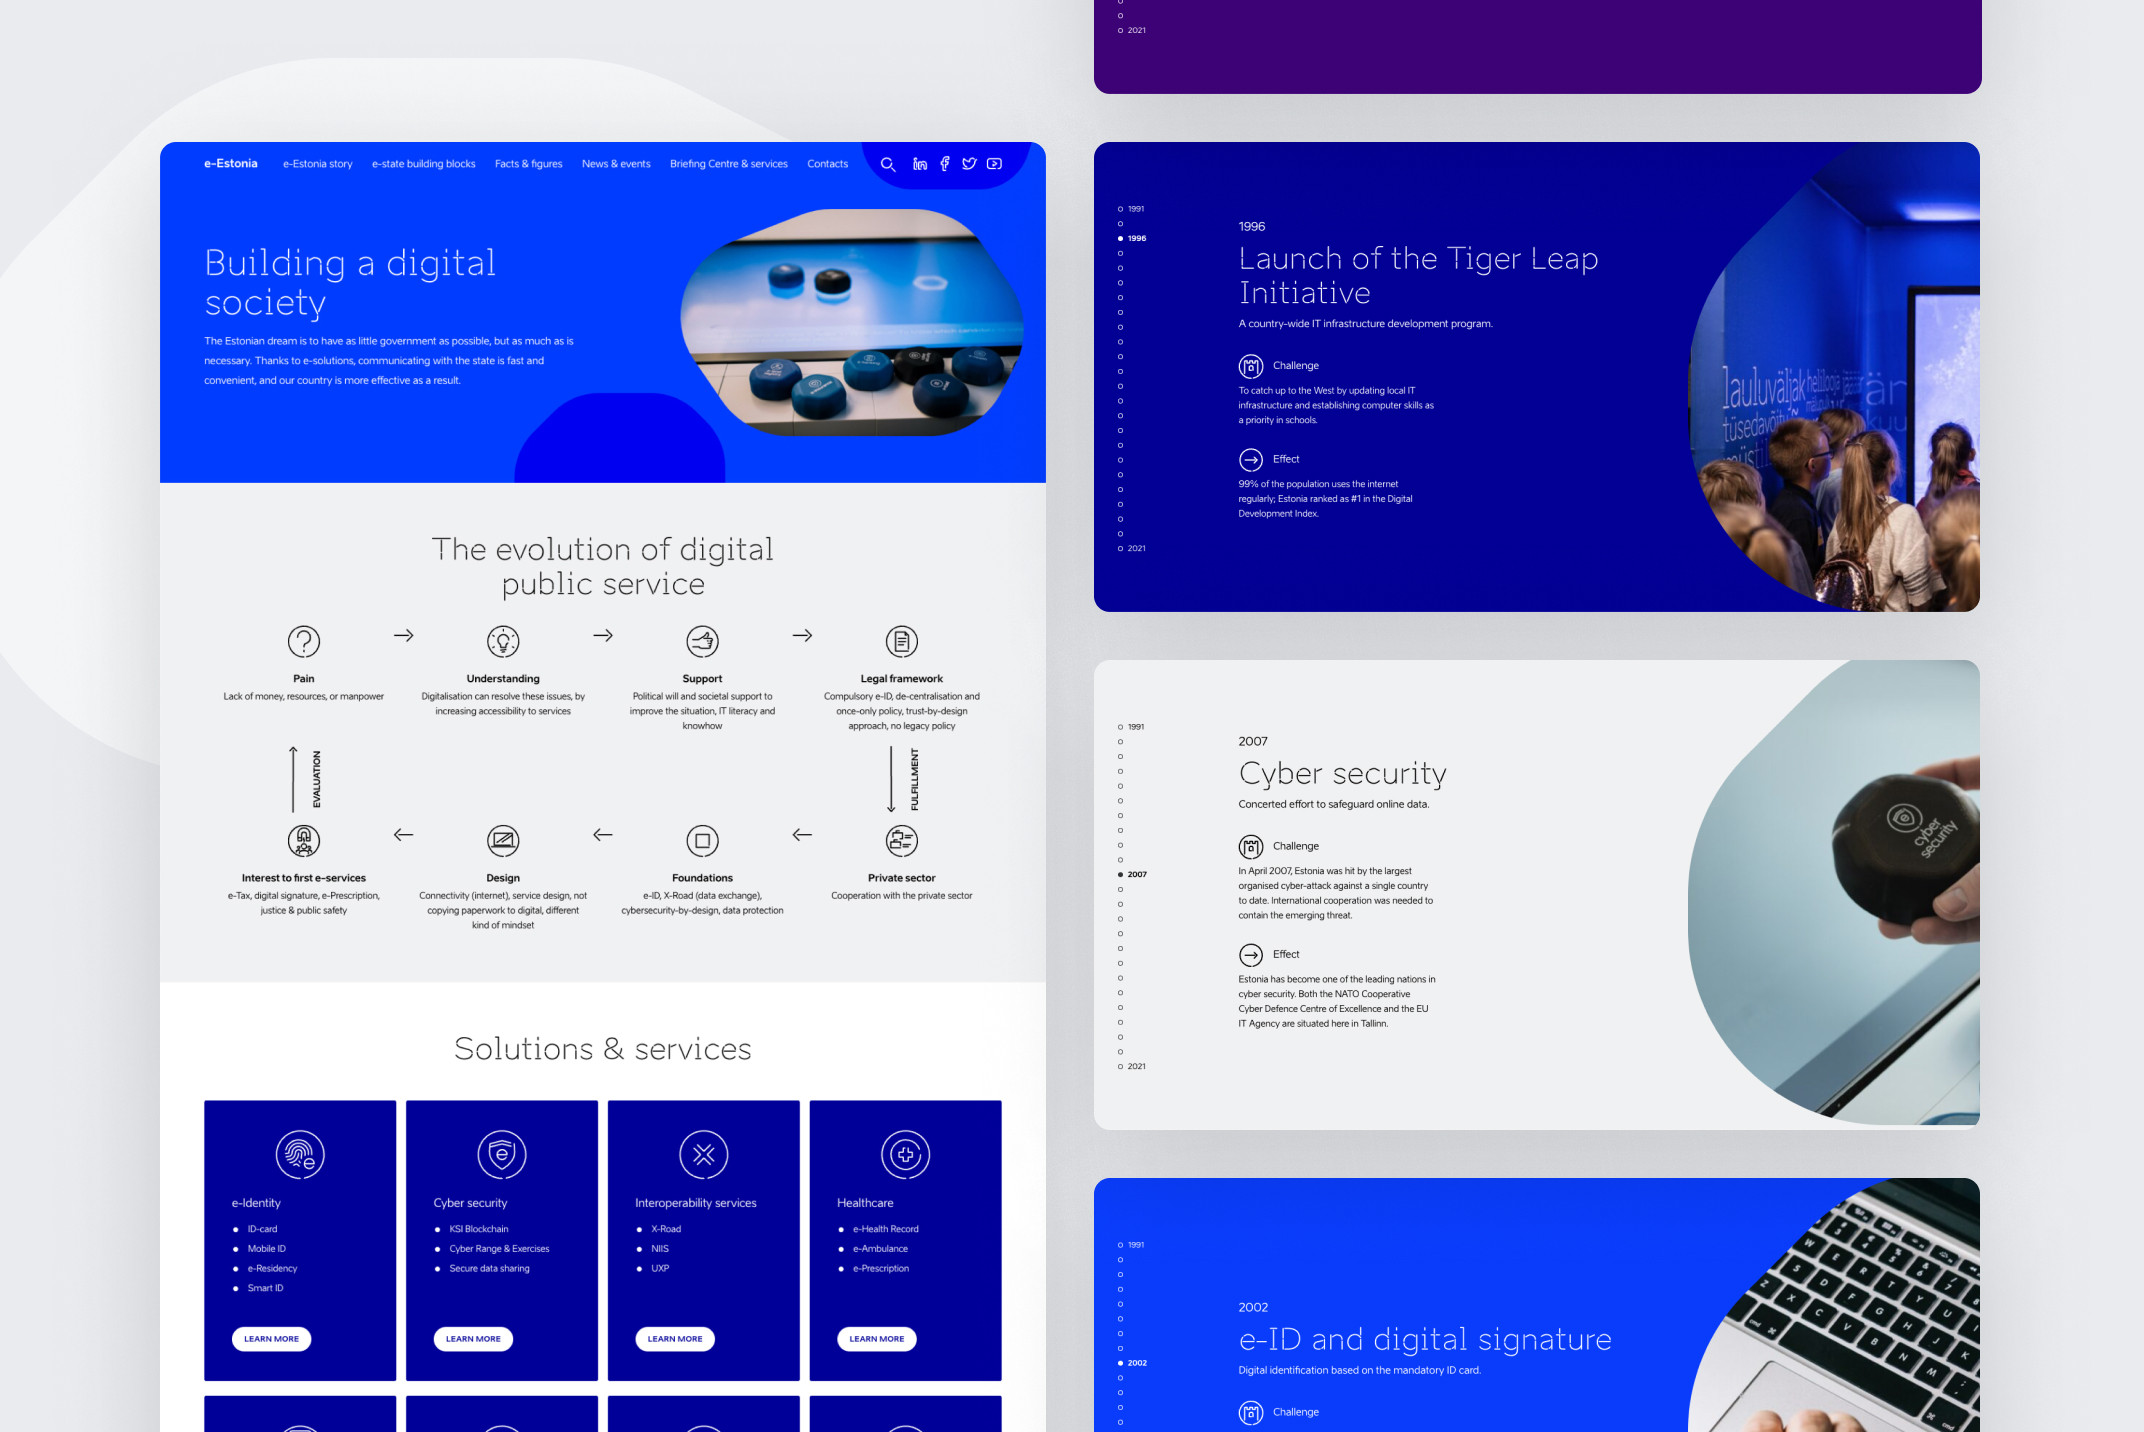 e-estonia website visual by DUX